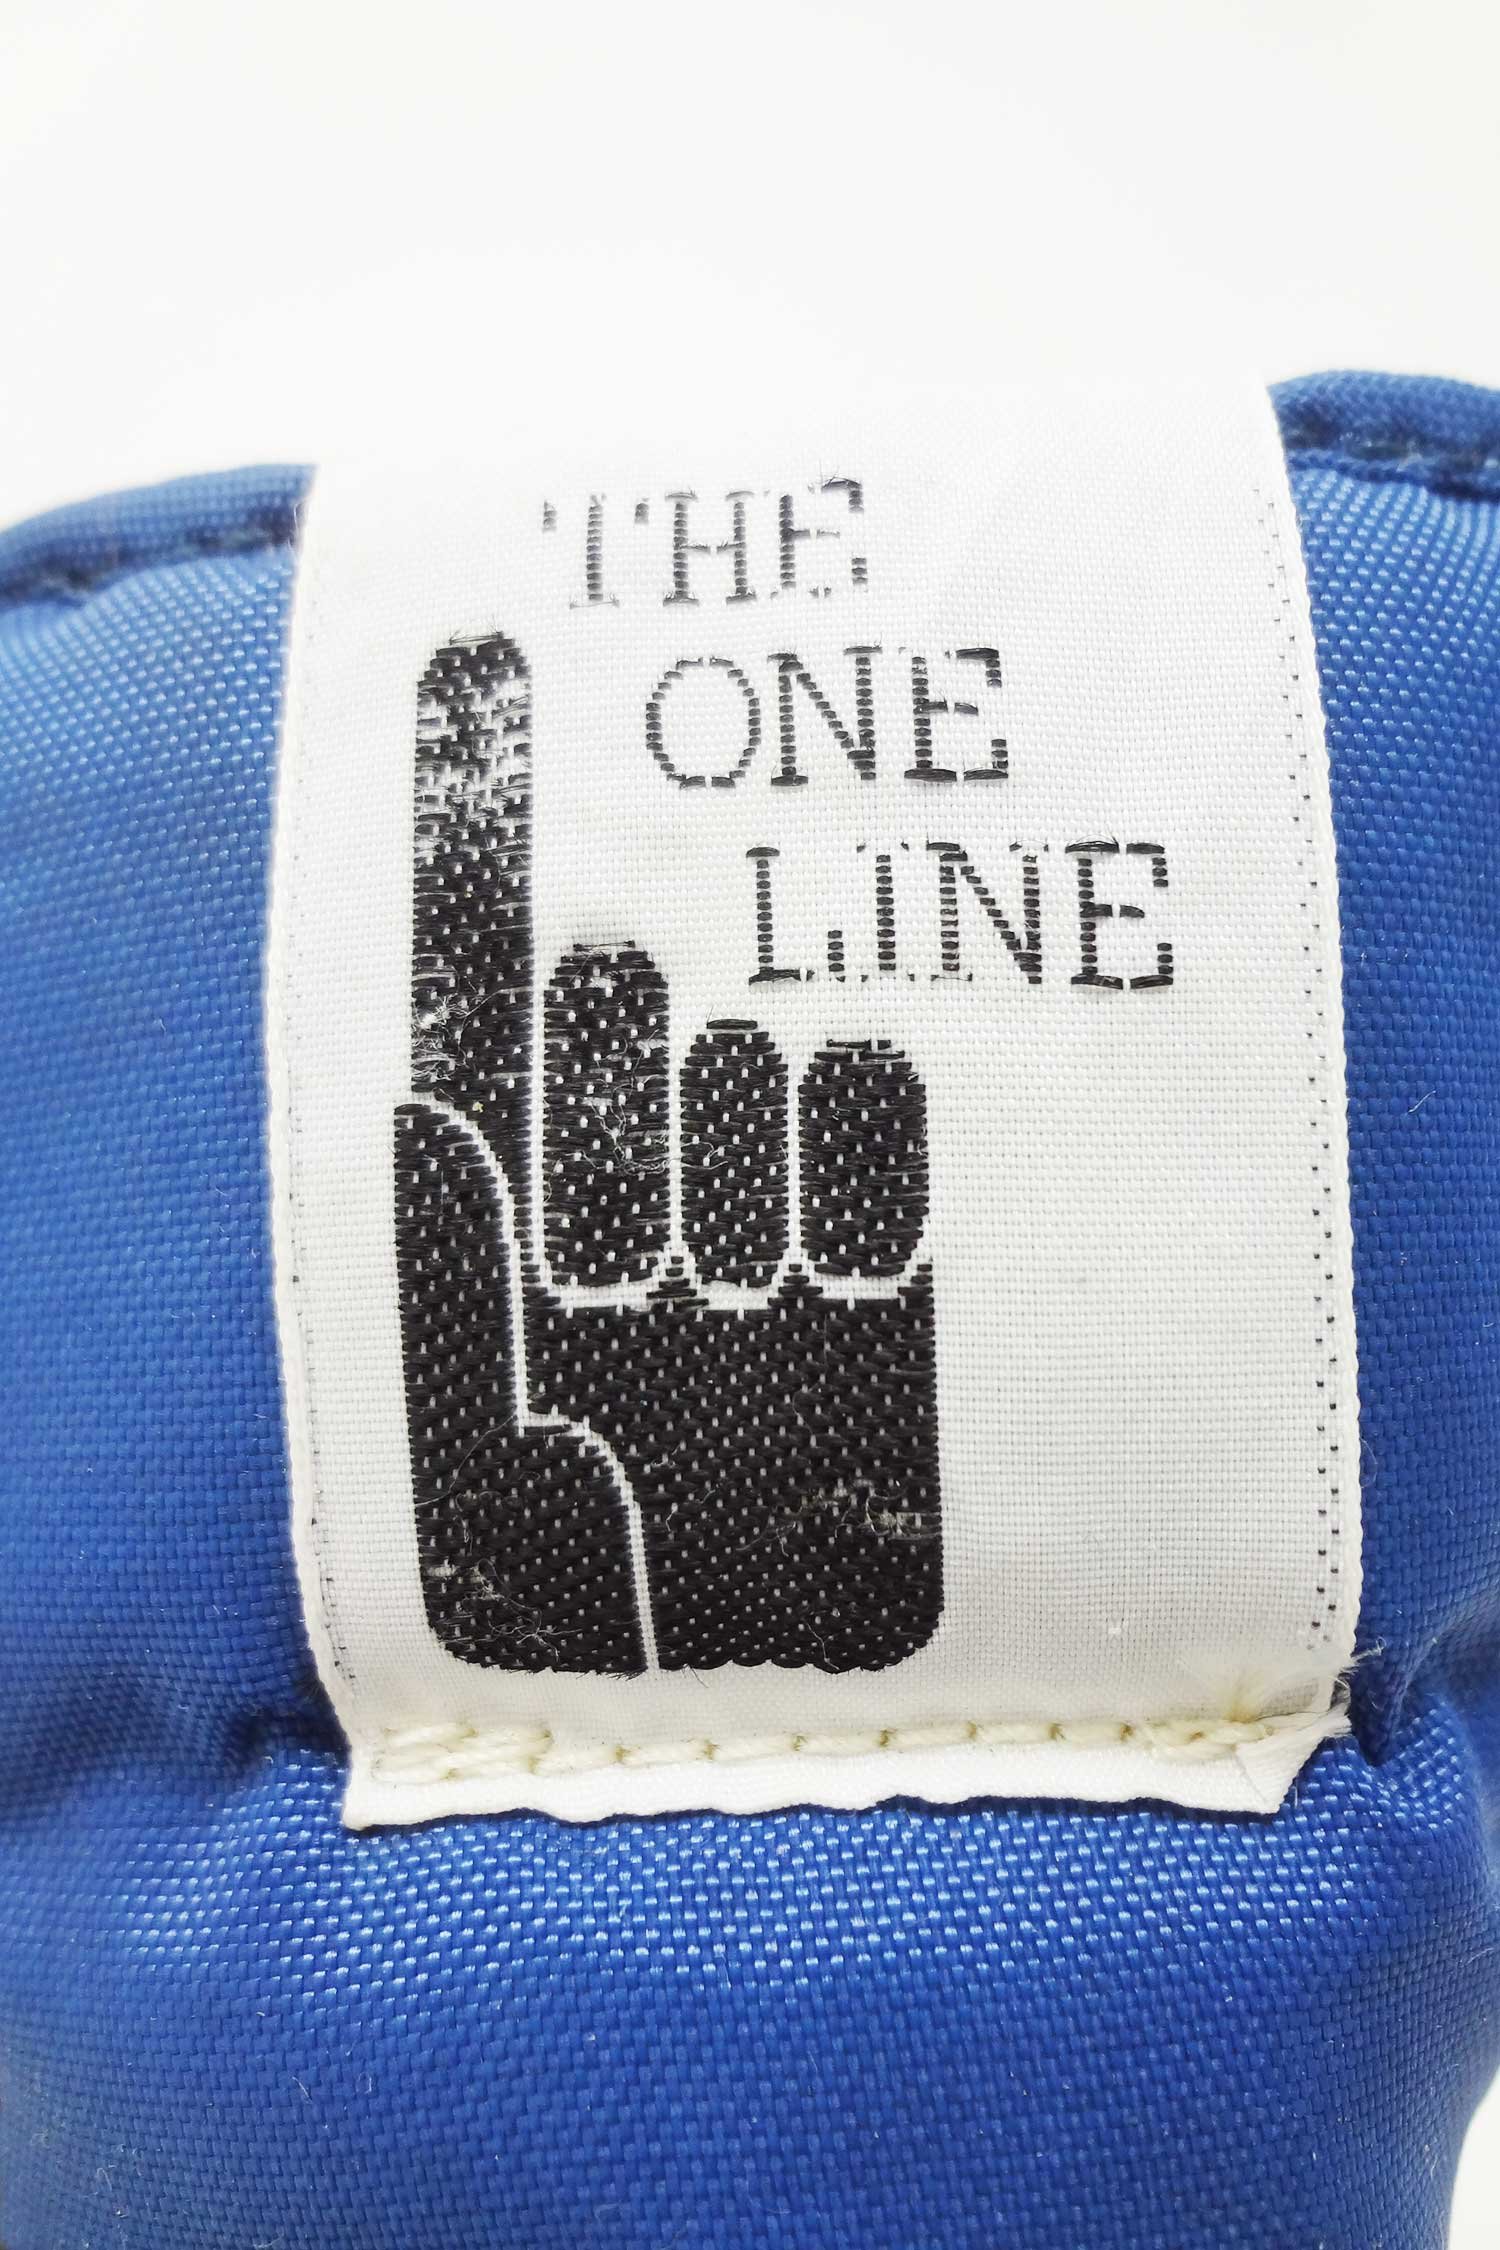 The Rarest Nike Shoes Ever - The One Line #1 finger logo designed by Air Jordan 1 designer Peter Moore